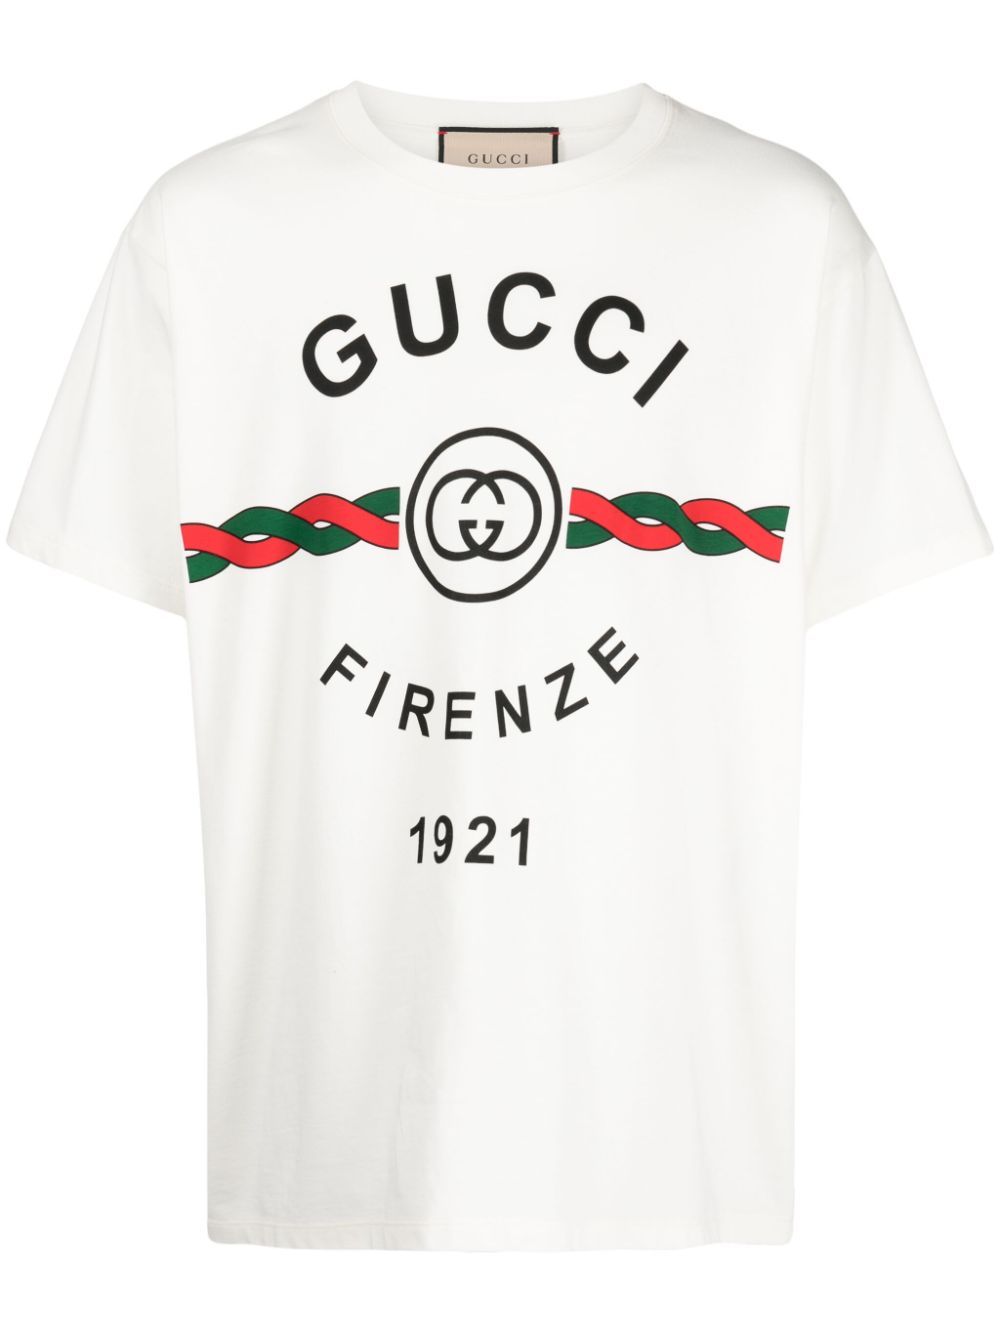 Gucci Gucci Firenze 1921 cotton T-shirt - White von Gucci